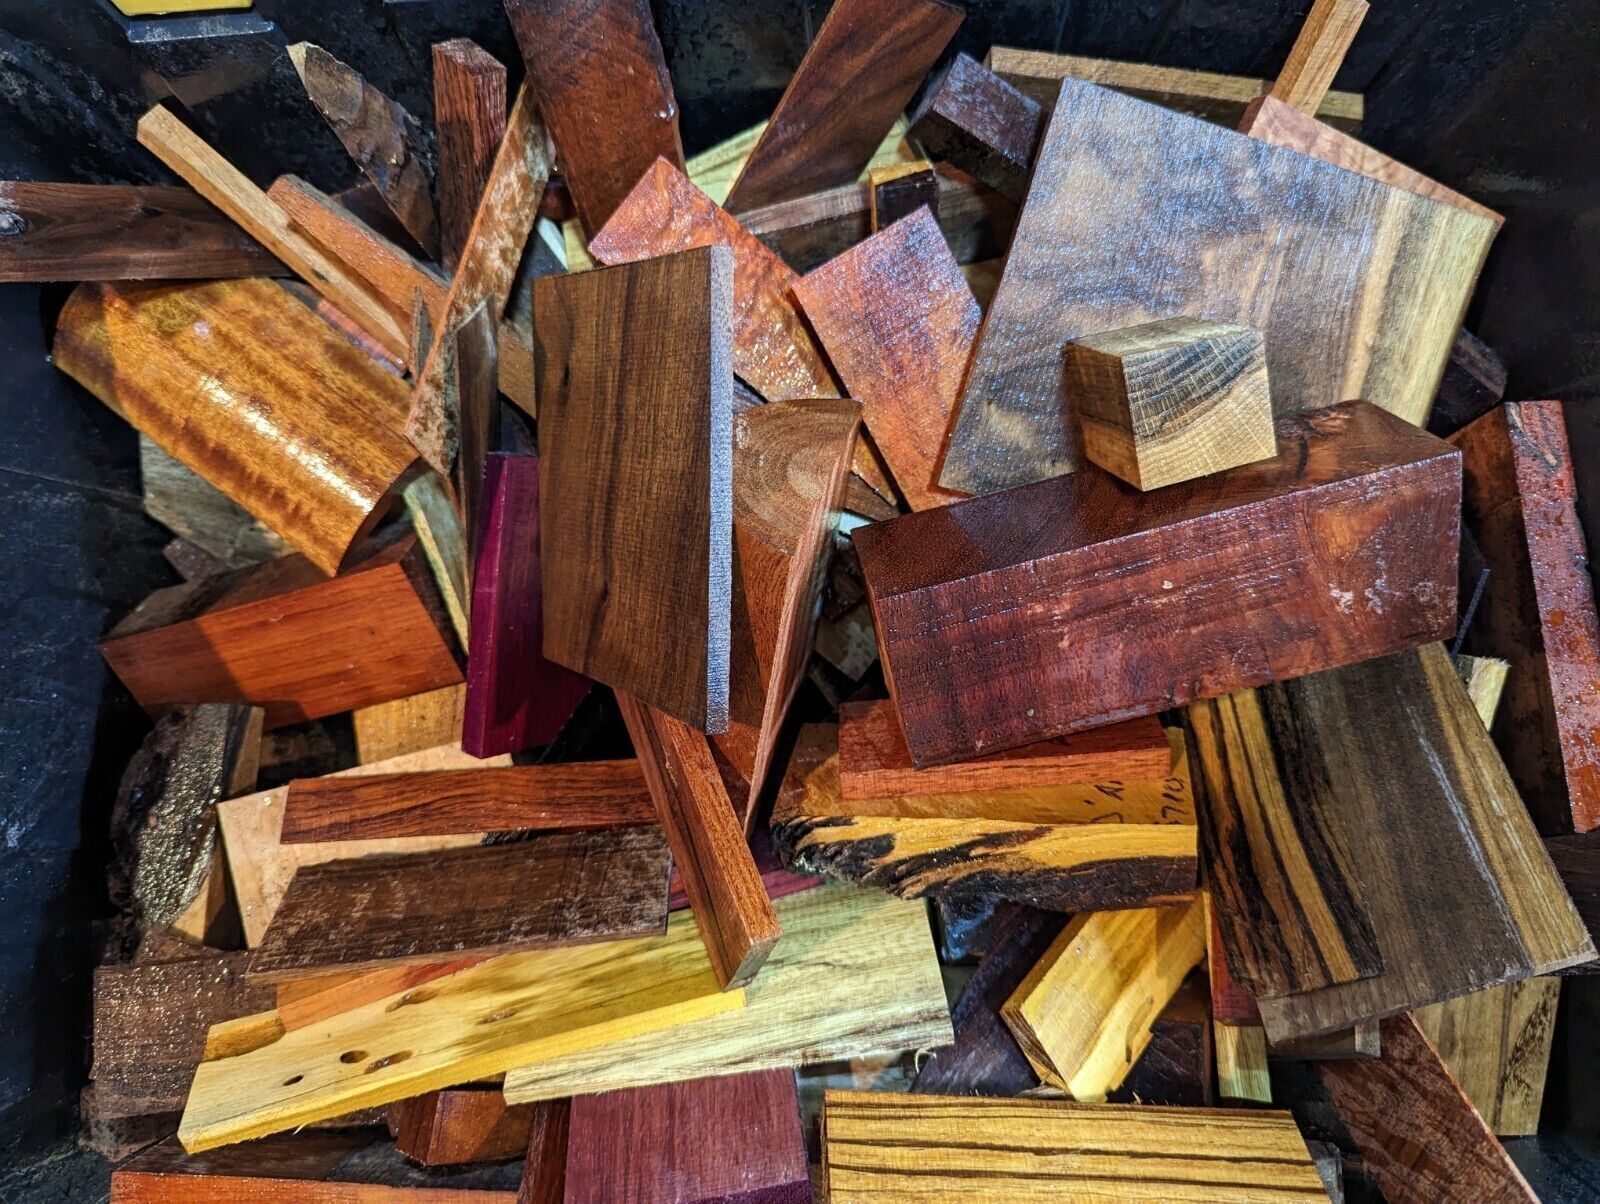 Craft Wood Scrap Box - Jewelry Wood Scraps